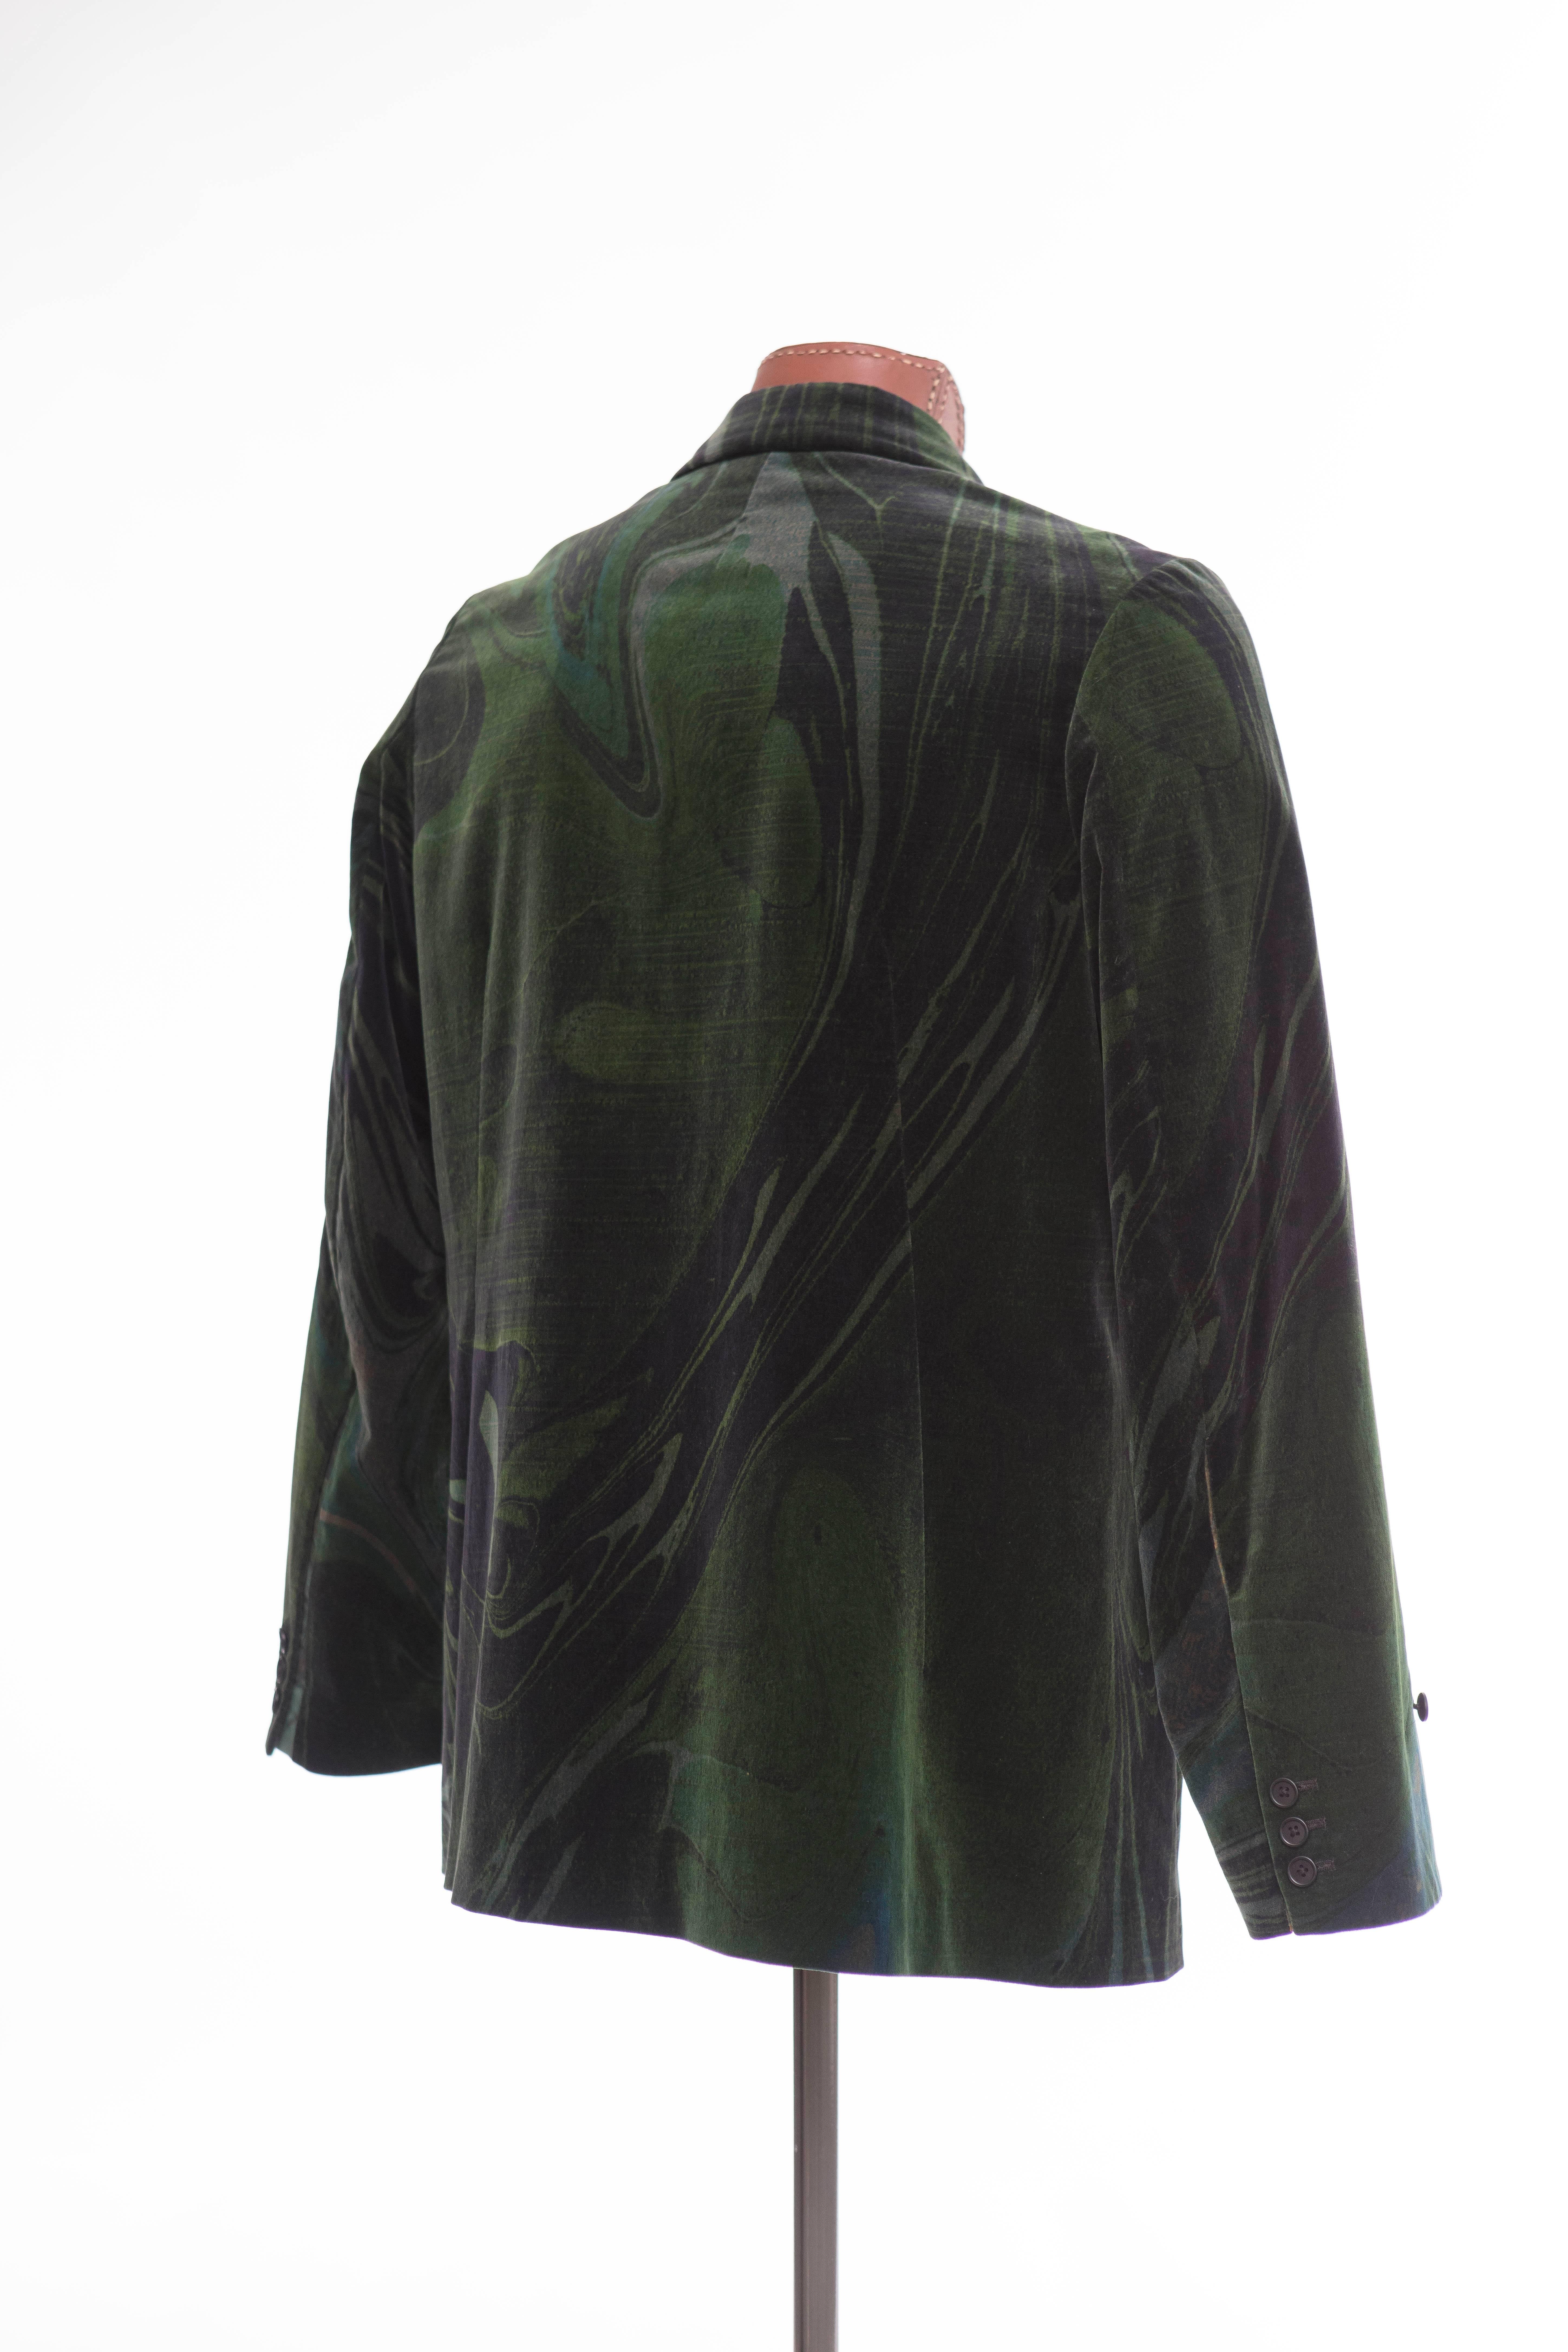 Yohji Yamamoto Men's Emerald Green Velvet Blazer, Autumn - Winter 2015 1